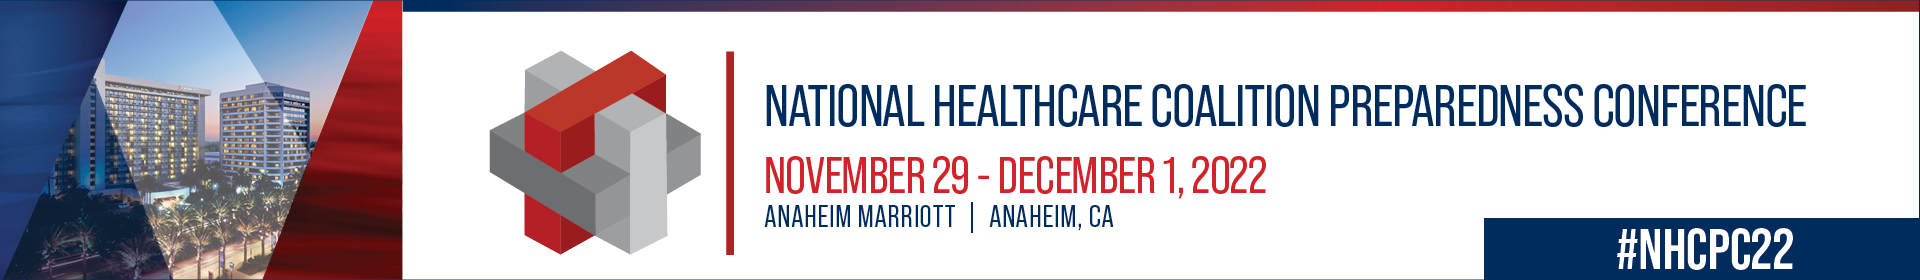 2022 National Healthcare Coalition Preparedness Conference  Event Banner